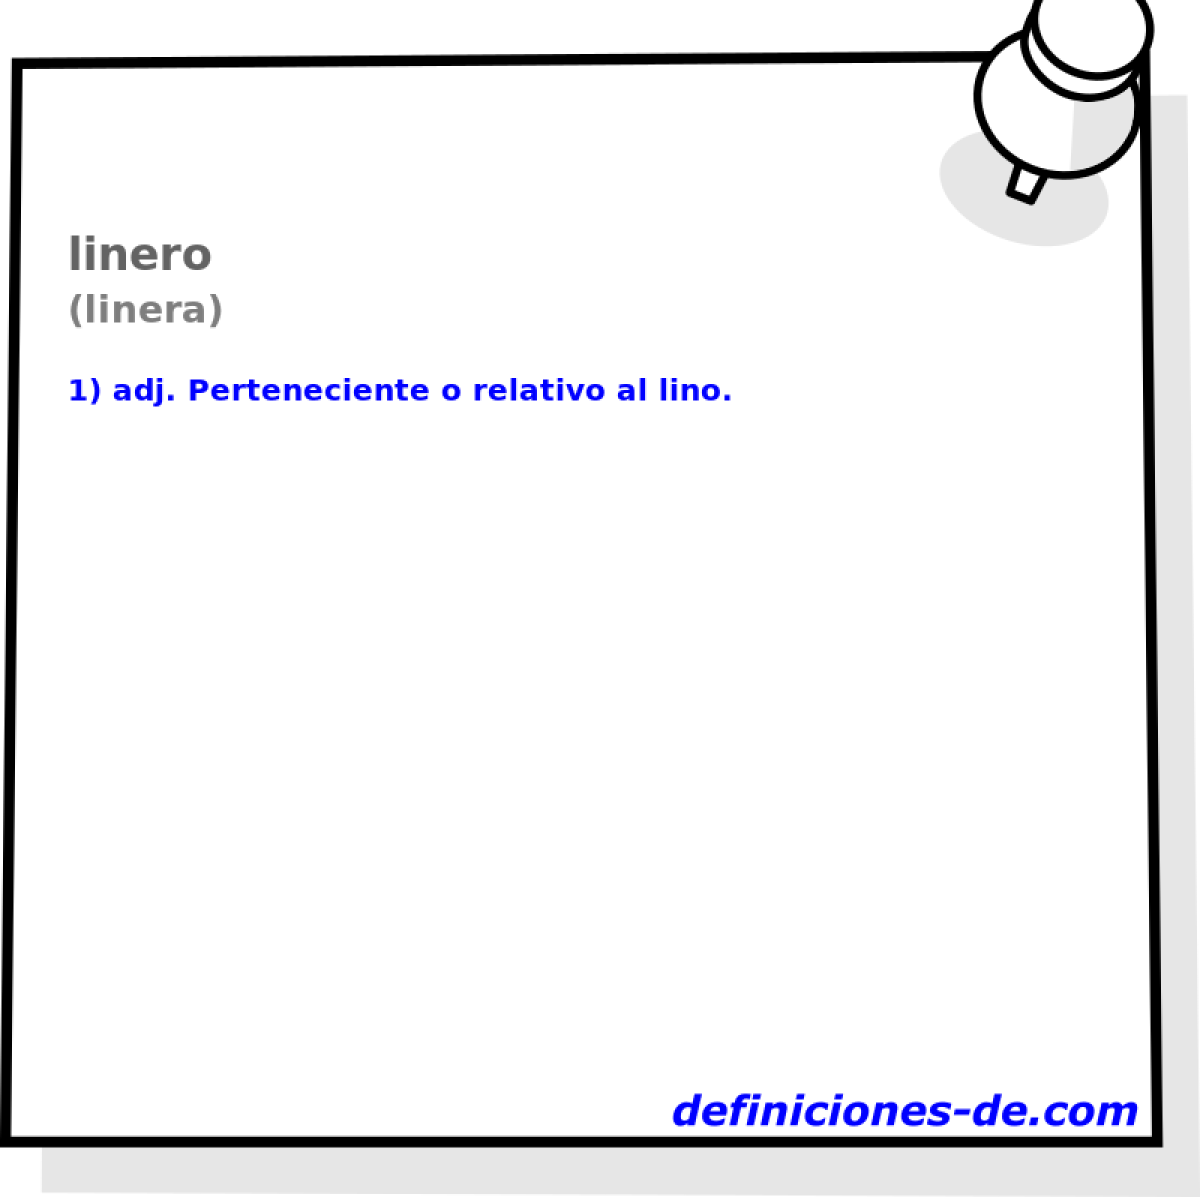 linero (linera)